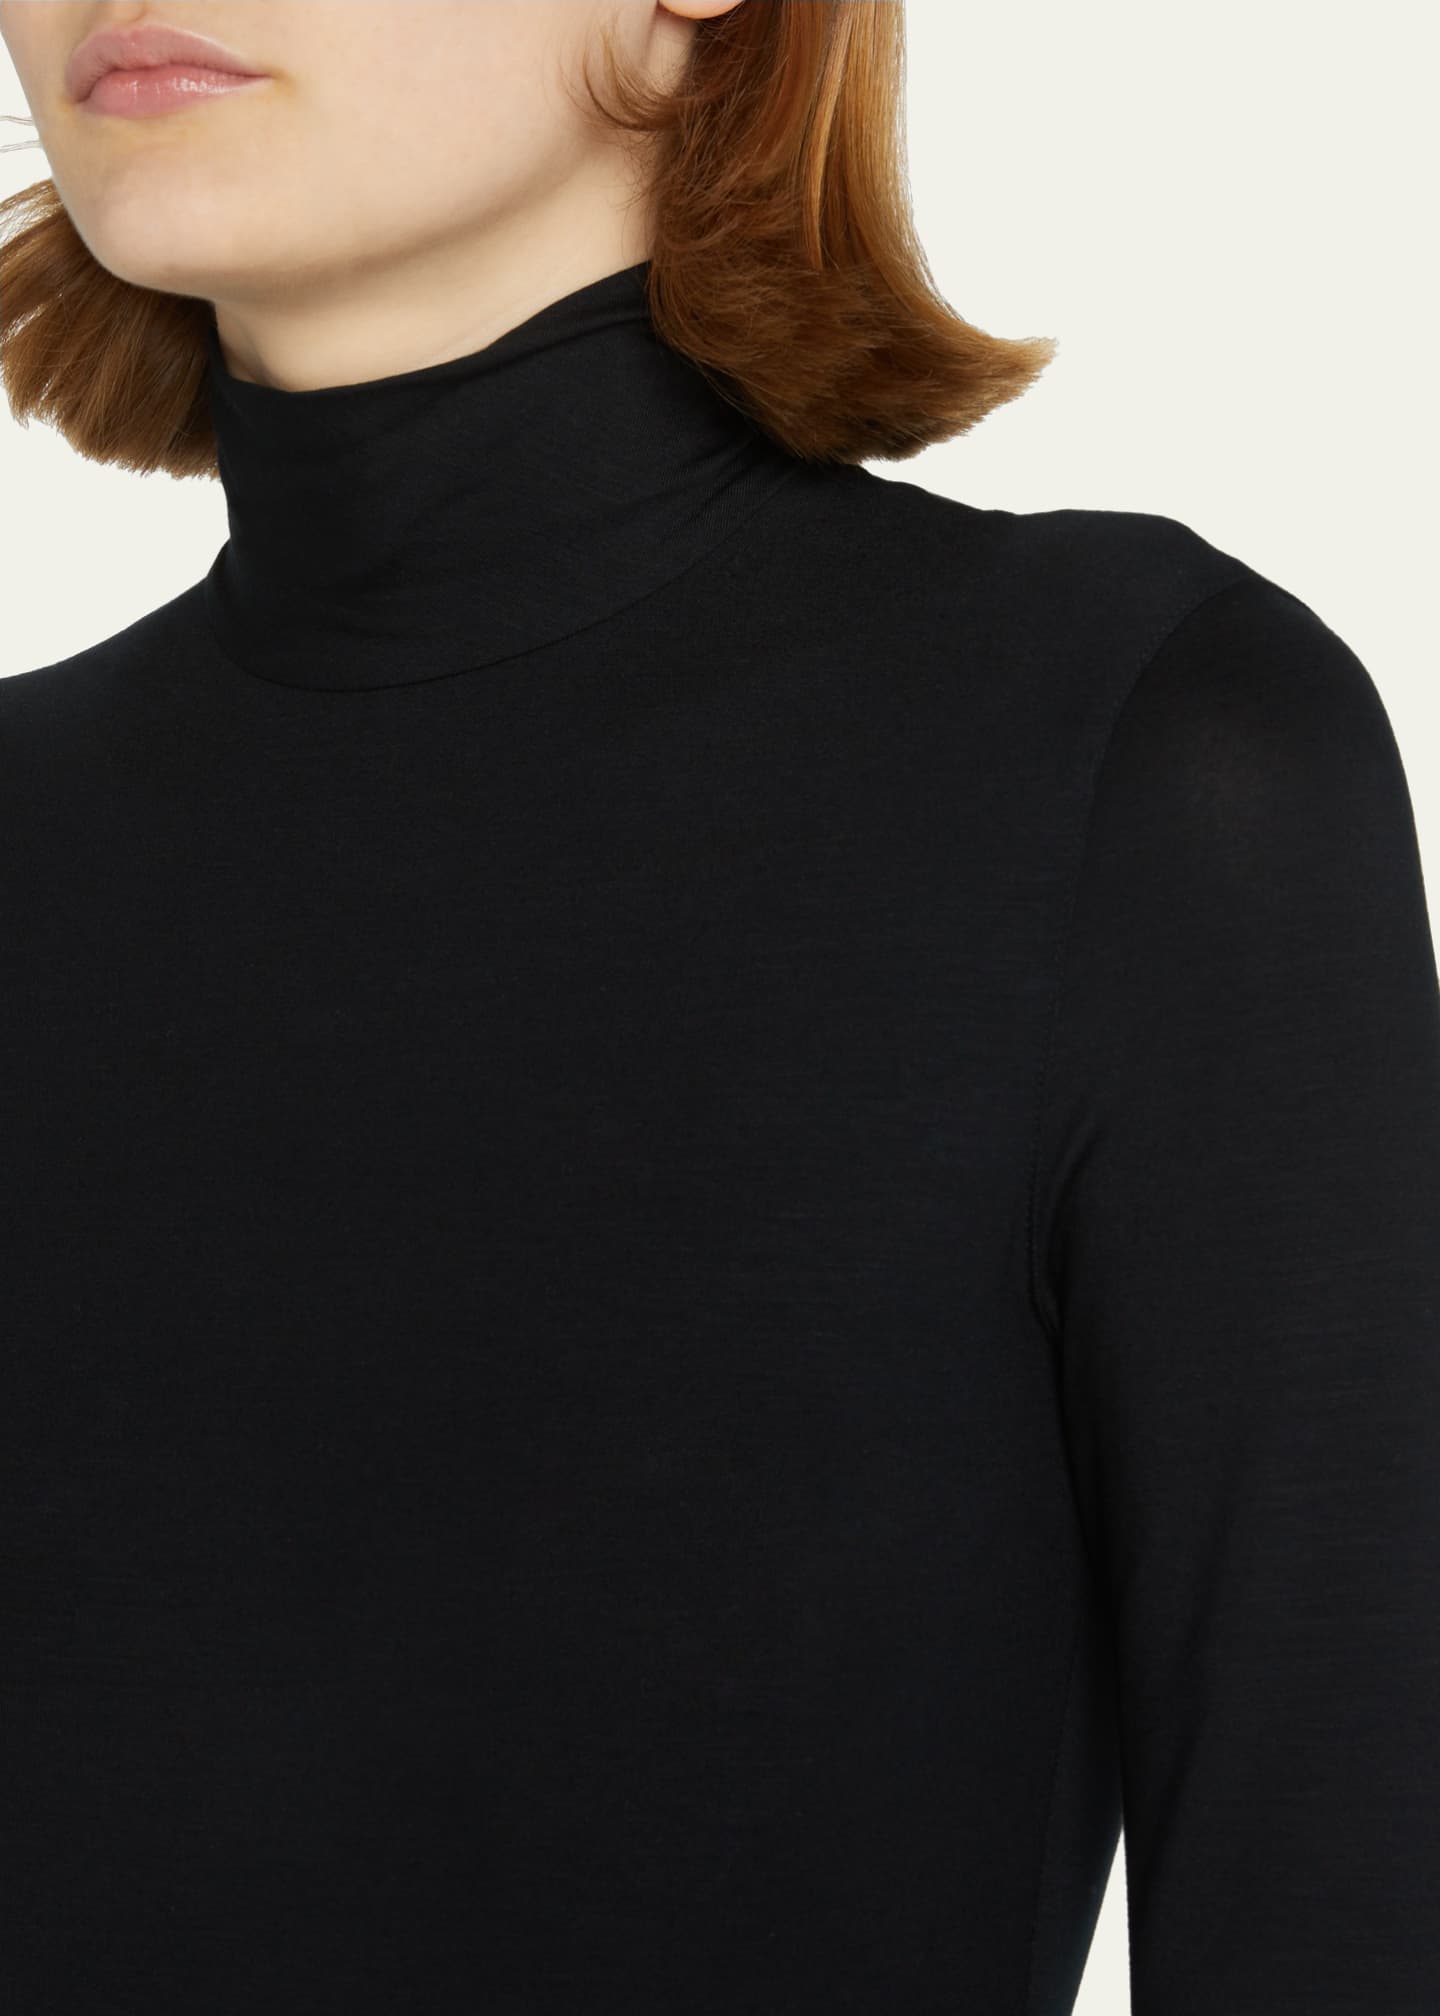 Akris Punto for Bergdorf Goodman Women's Clothing On Sale Up To 90% Off  Retail